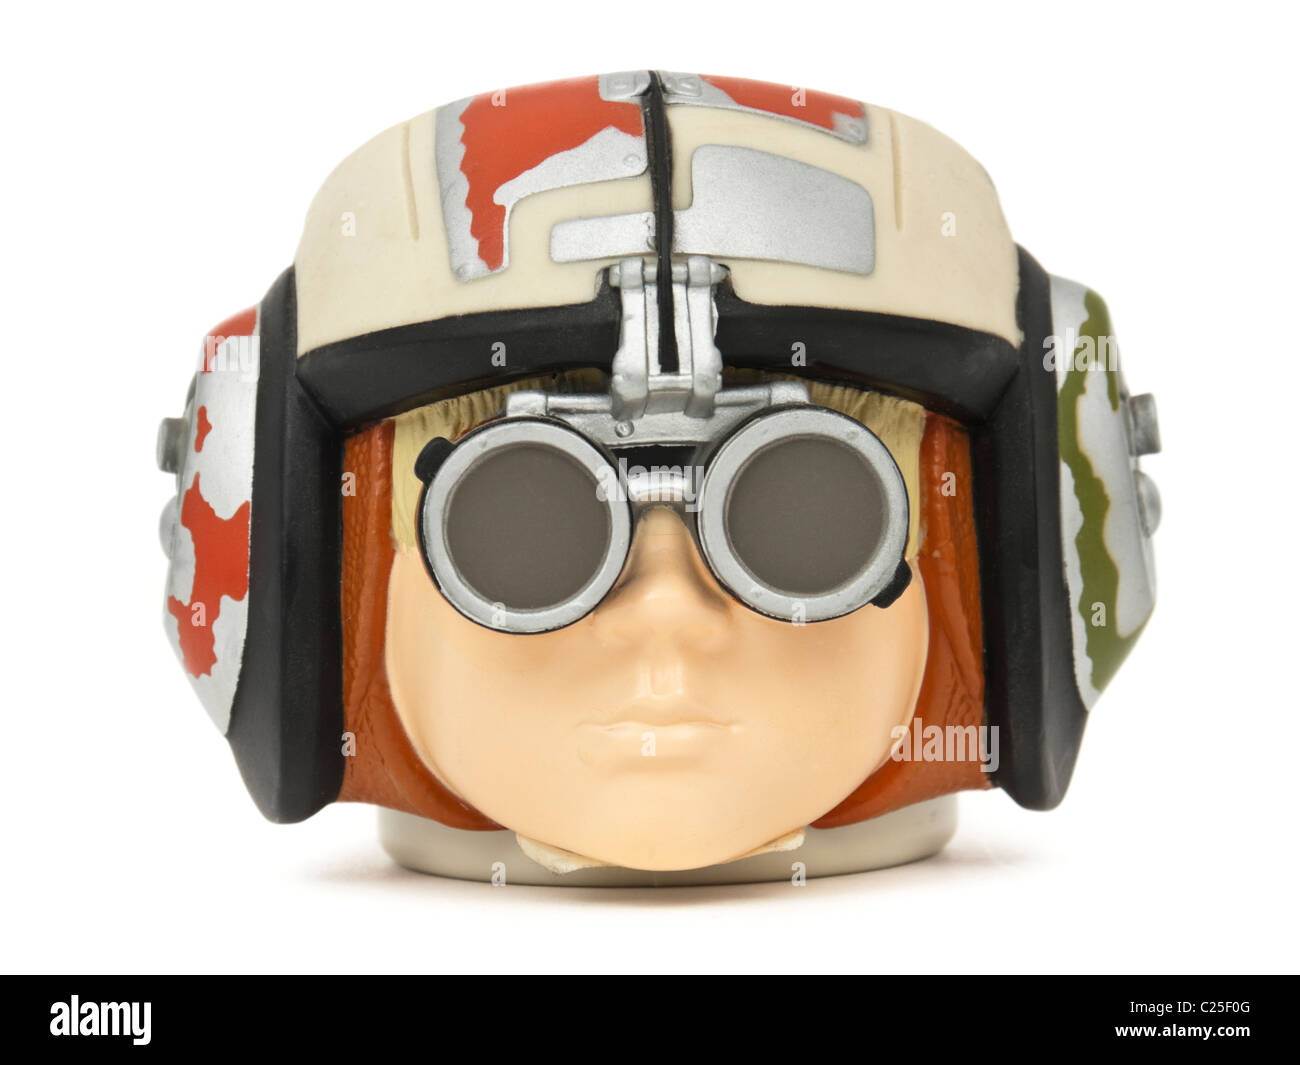 Anakin Skywalker as Naboo pilot (novelty mug) Stock Photo